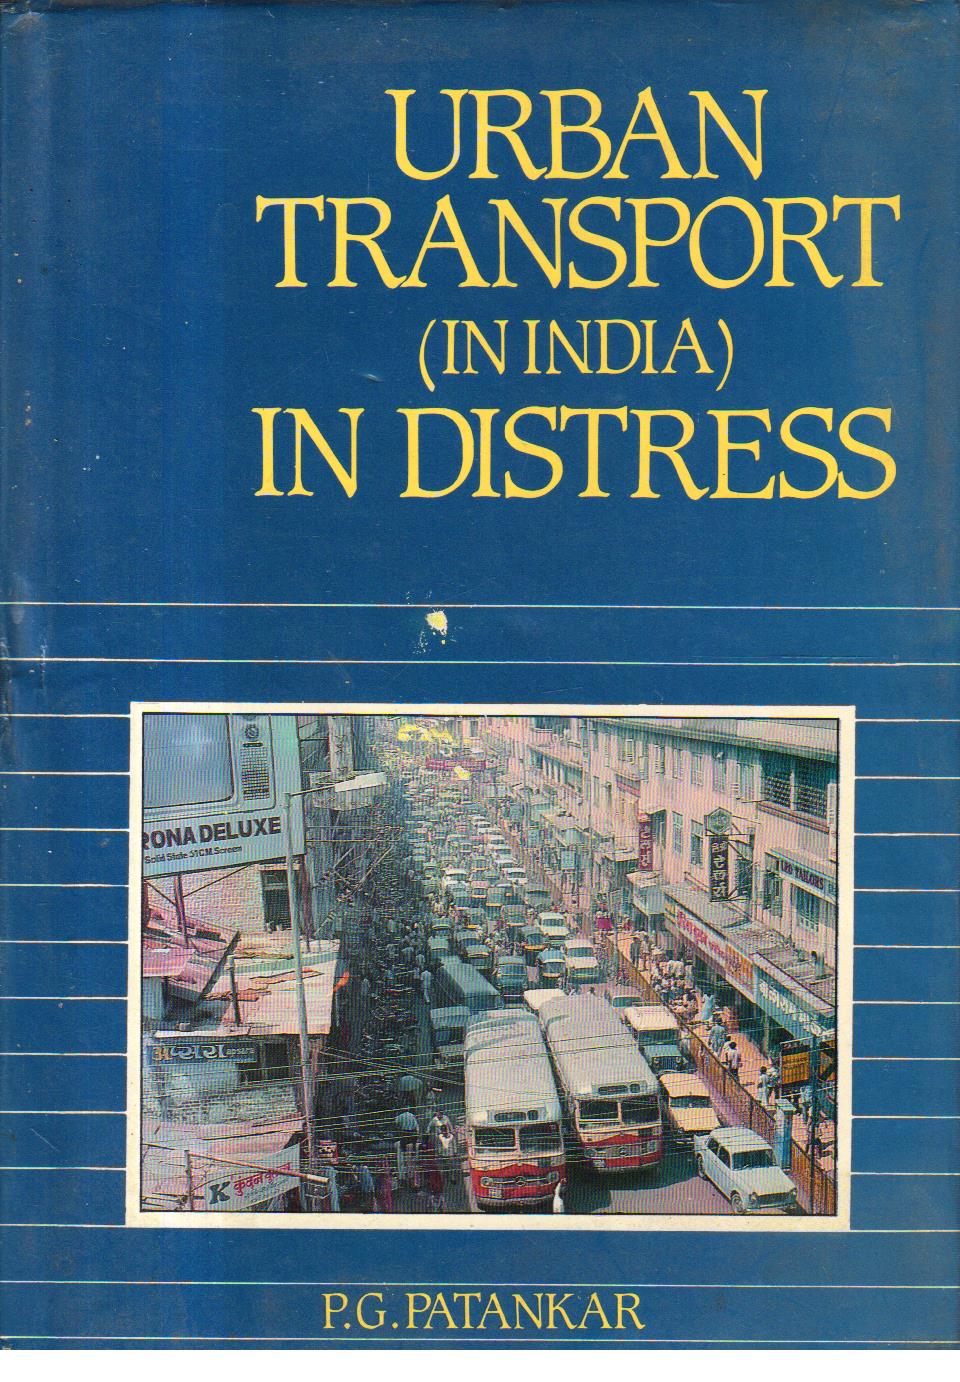 Urban Transport in India in Distress.